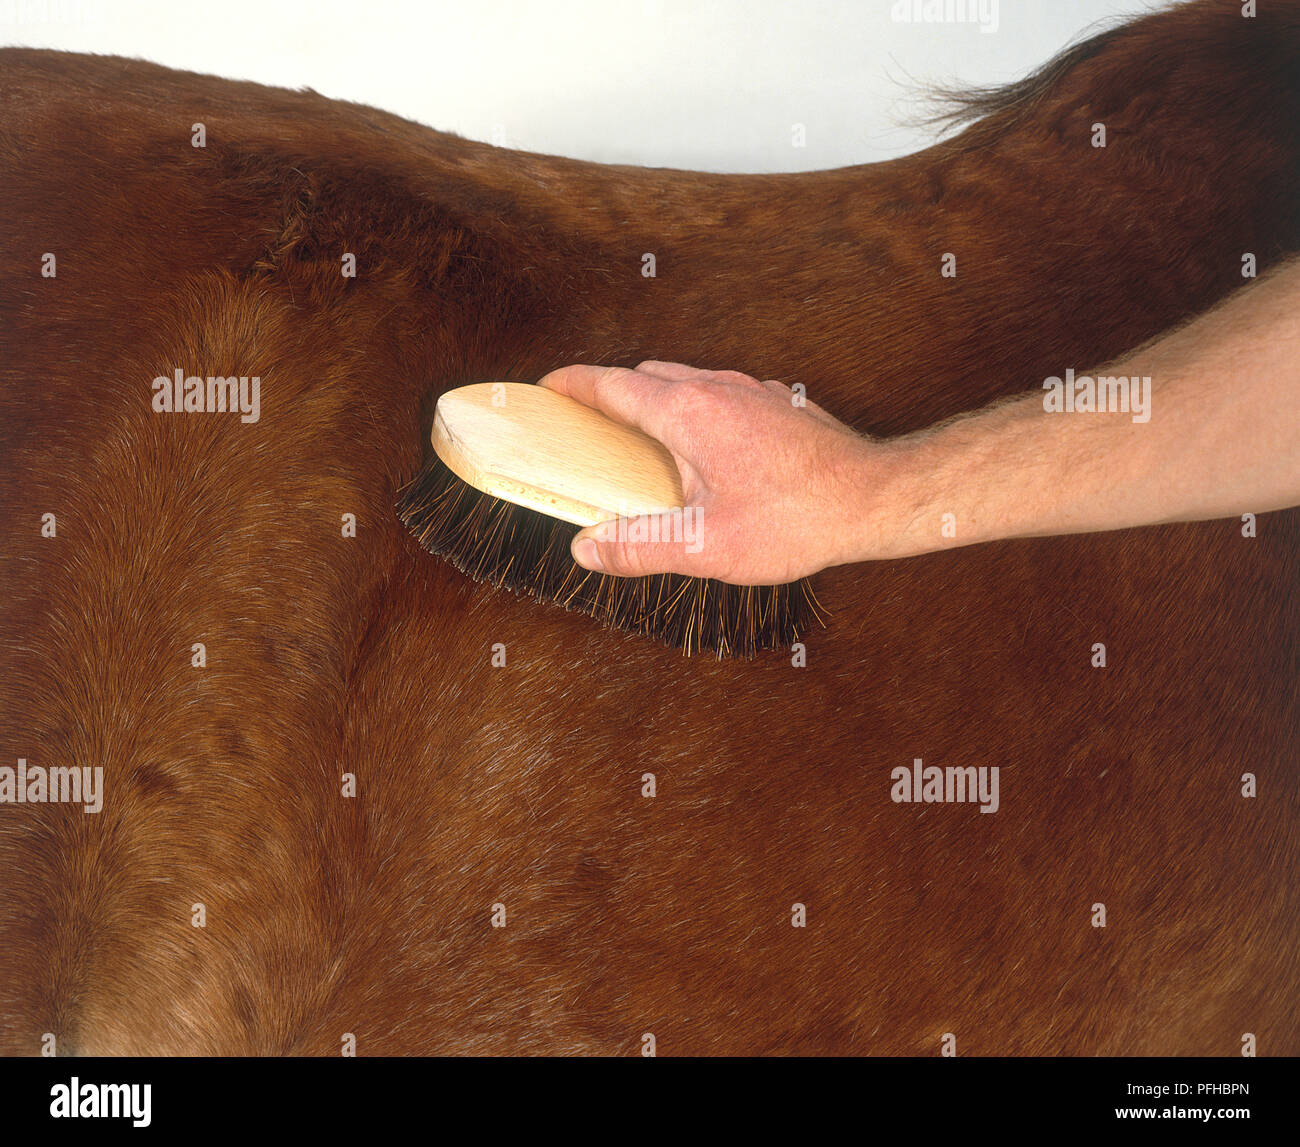 Man's hand using brush on side of horse Stock Photo